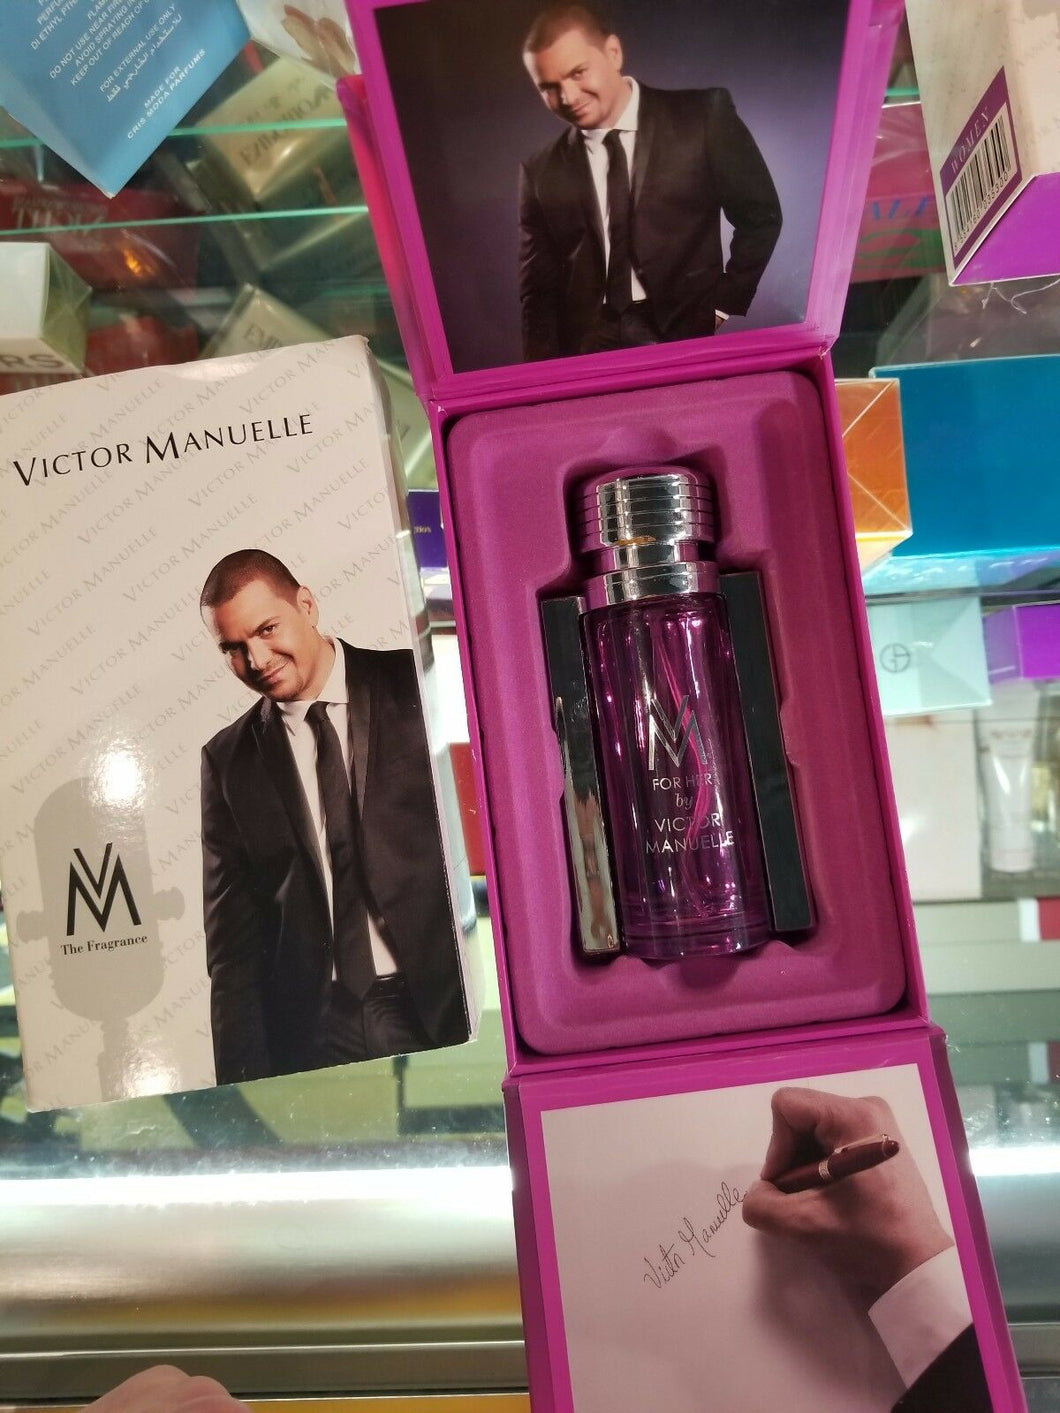 Victor Manuelle VM for Her 3.4 oz 100 ml EDT Eau de Toilette Perfume Spray Women - Perfume Gallery